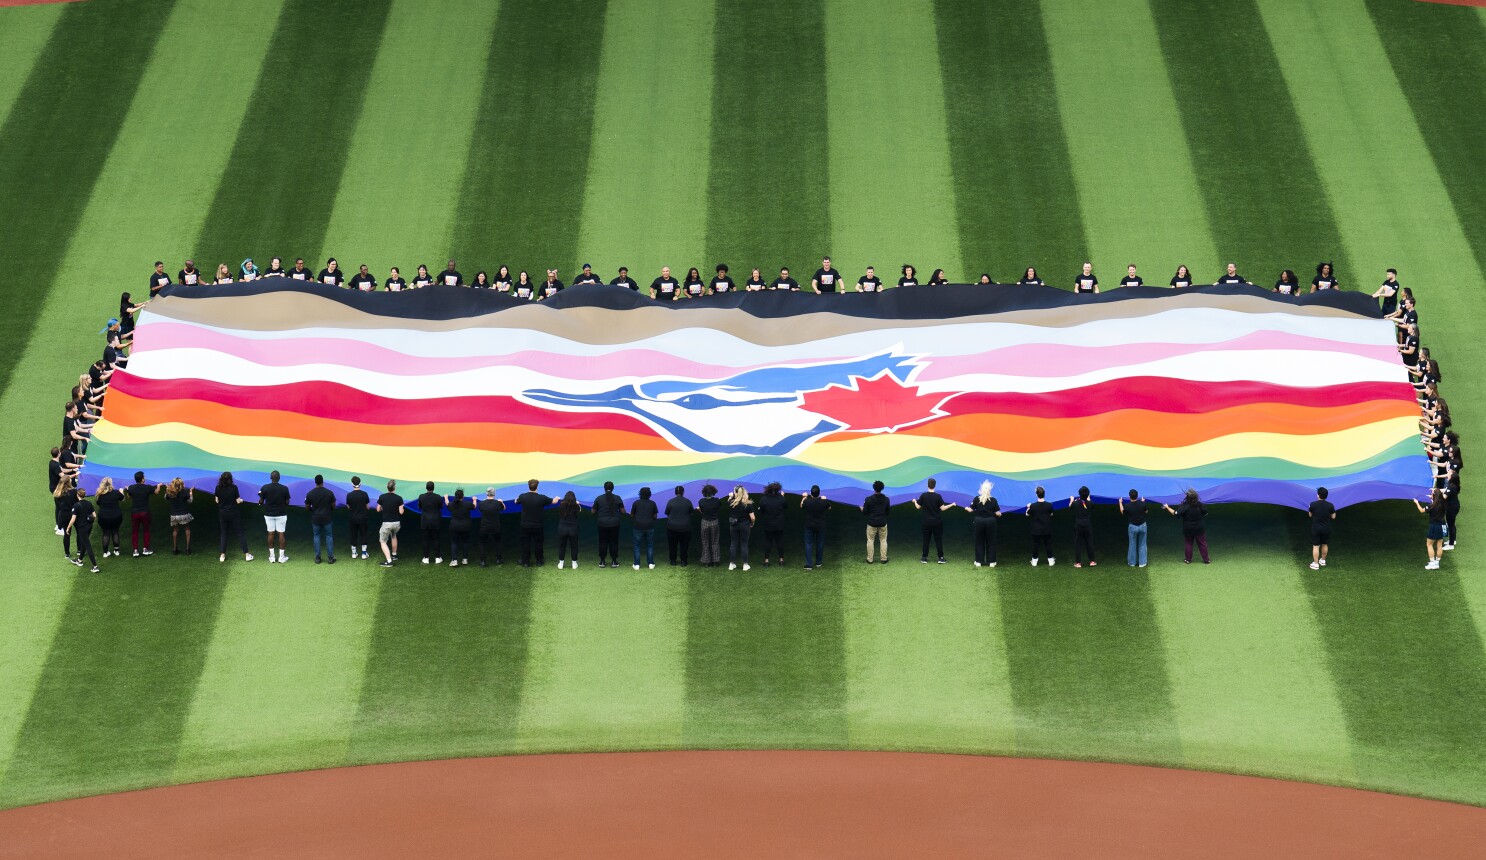 AP PHOTOS: MLB teams celebrate LGBTQ+ community with ballpark